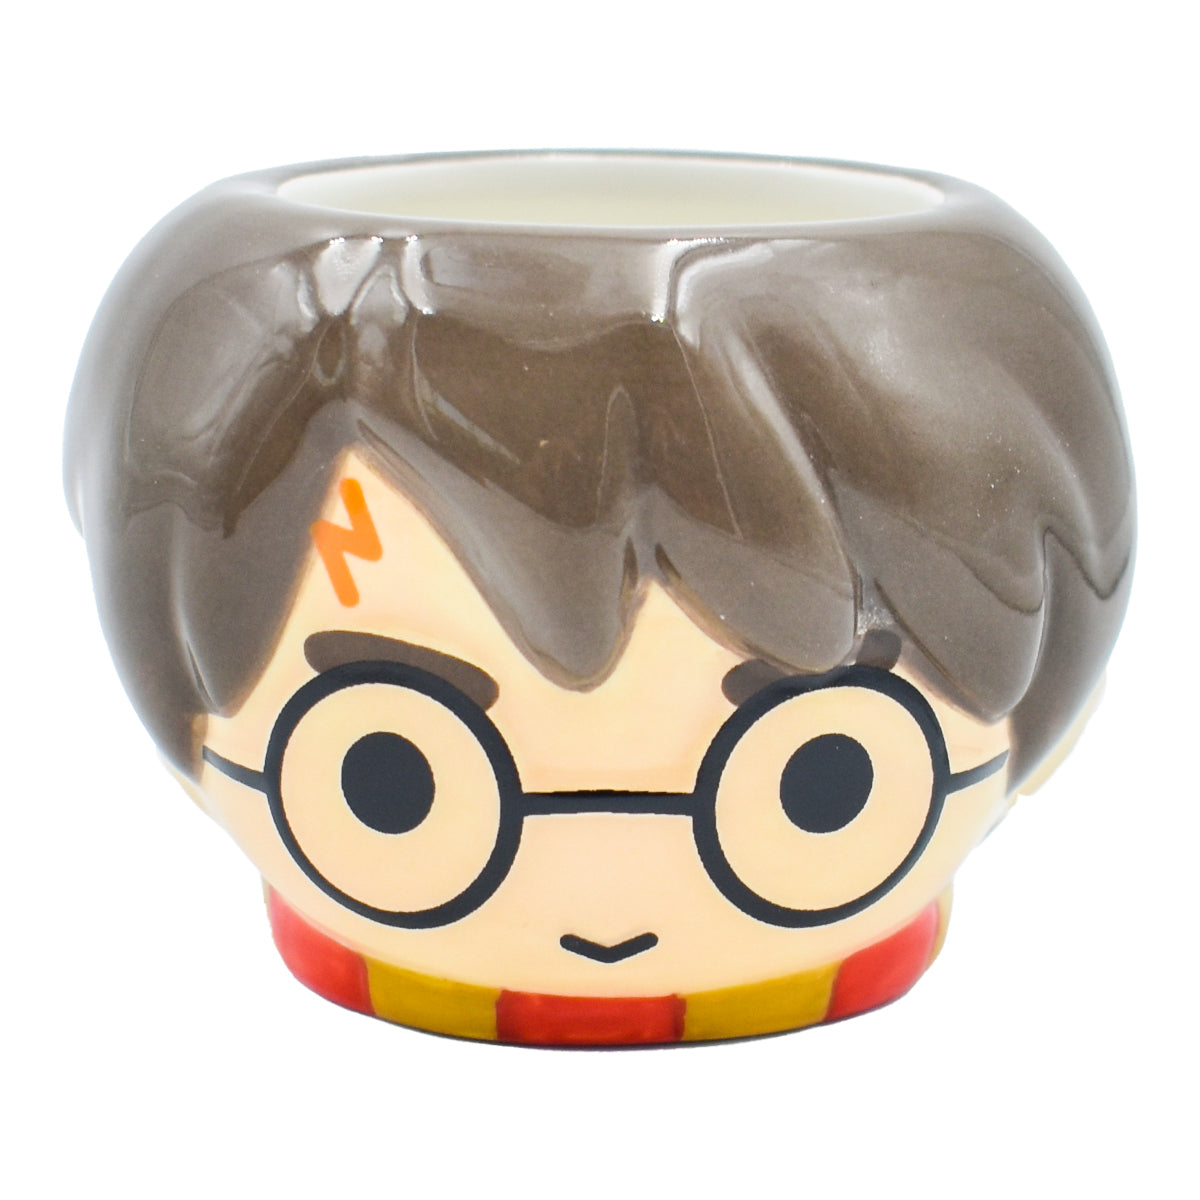 Set Juego Mini Tazas Expreso Fun kids Warner Bros Harry Potter Caldero Ceramica 103.5ml 2 pzas